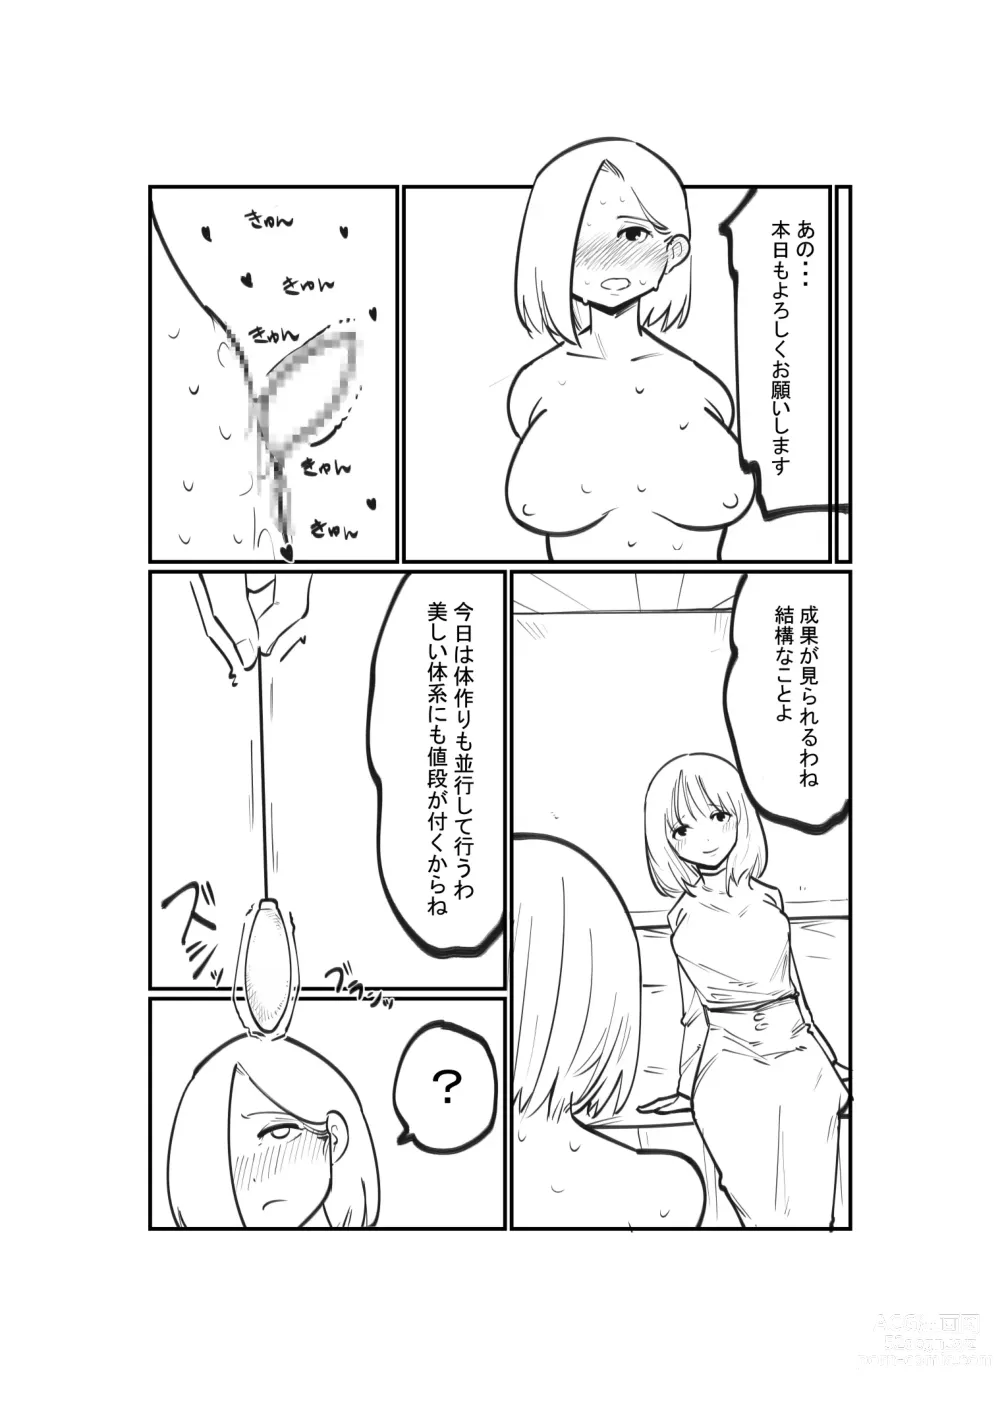 Page 16 of doujinshi Dorei Shounin no Cli Ikusei